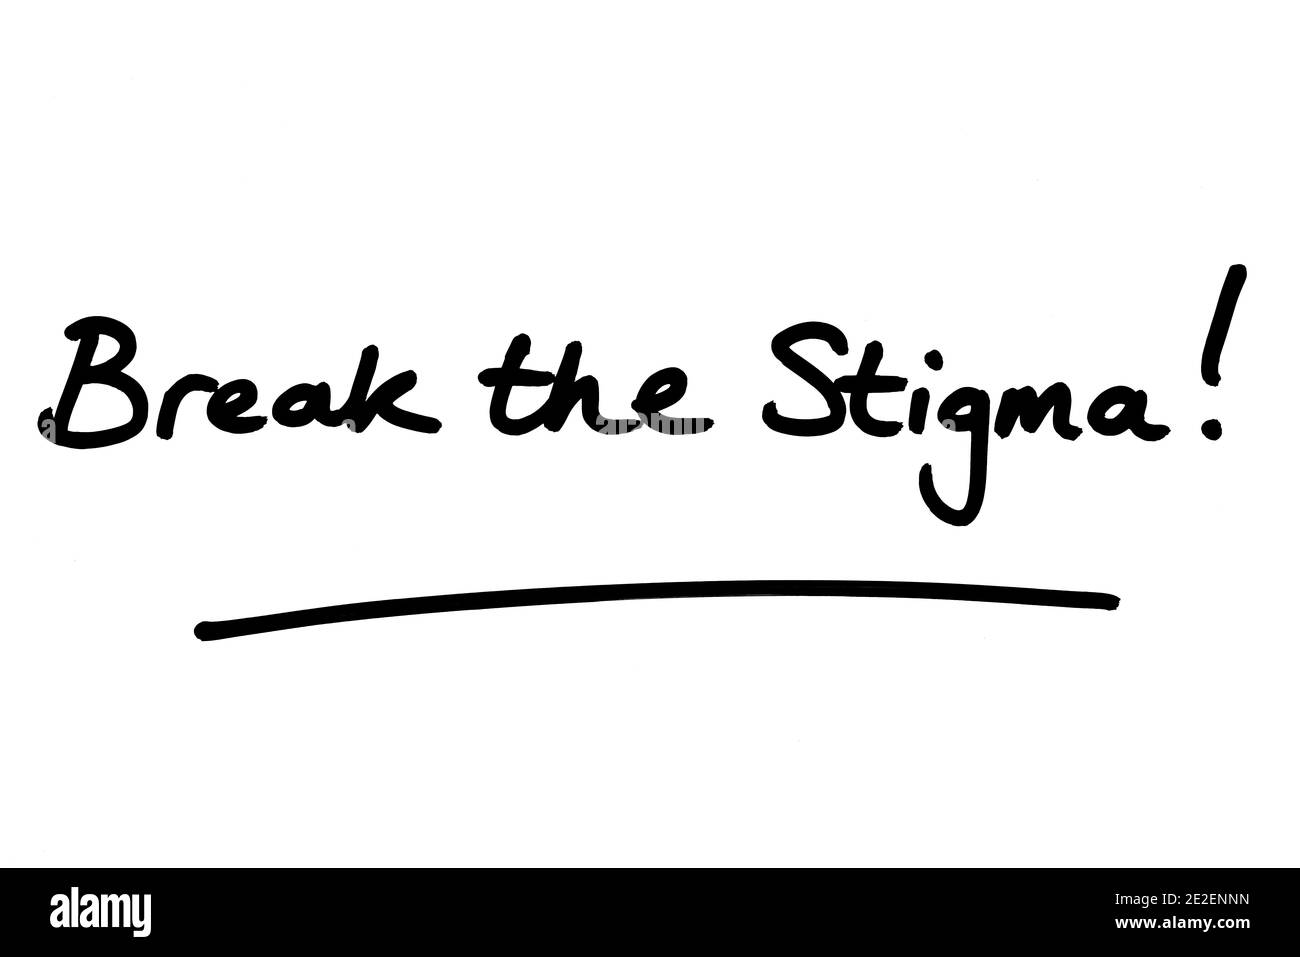 Break the Stigma! handwritten on a white background. Stock Photo